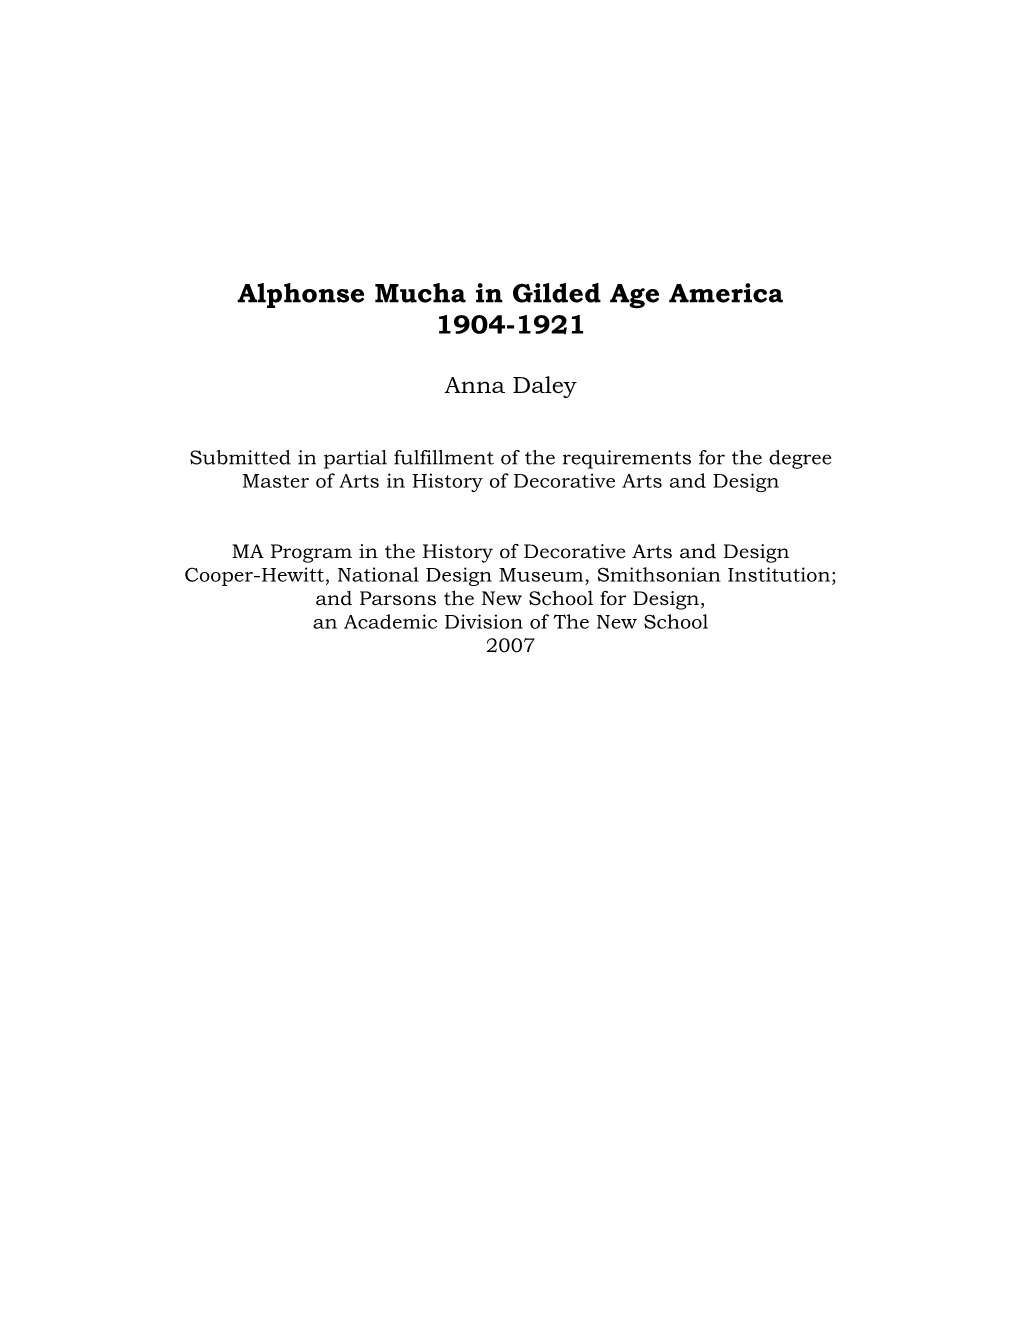 Alphonse Mucha in Gilded Age America 1904-1921